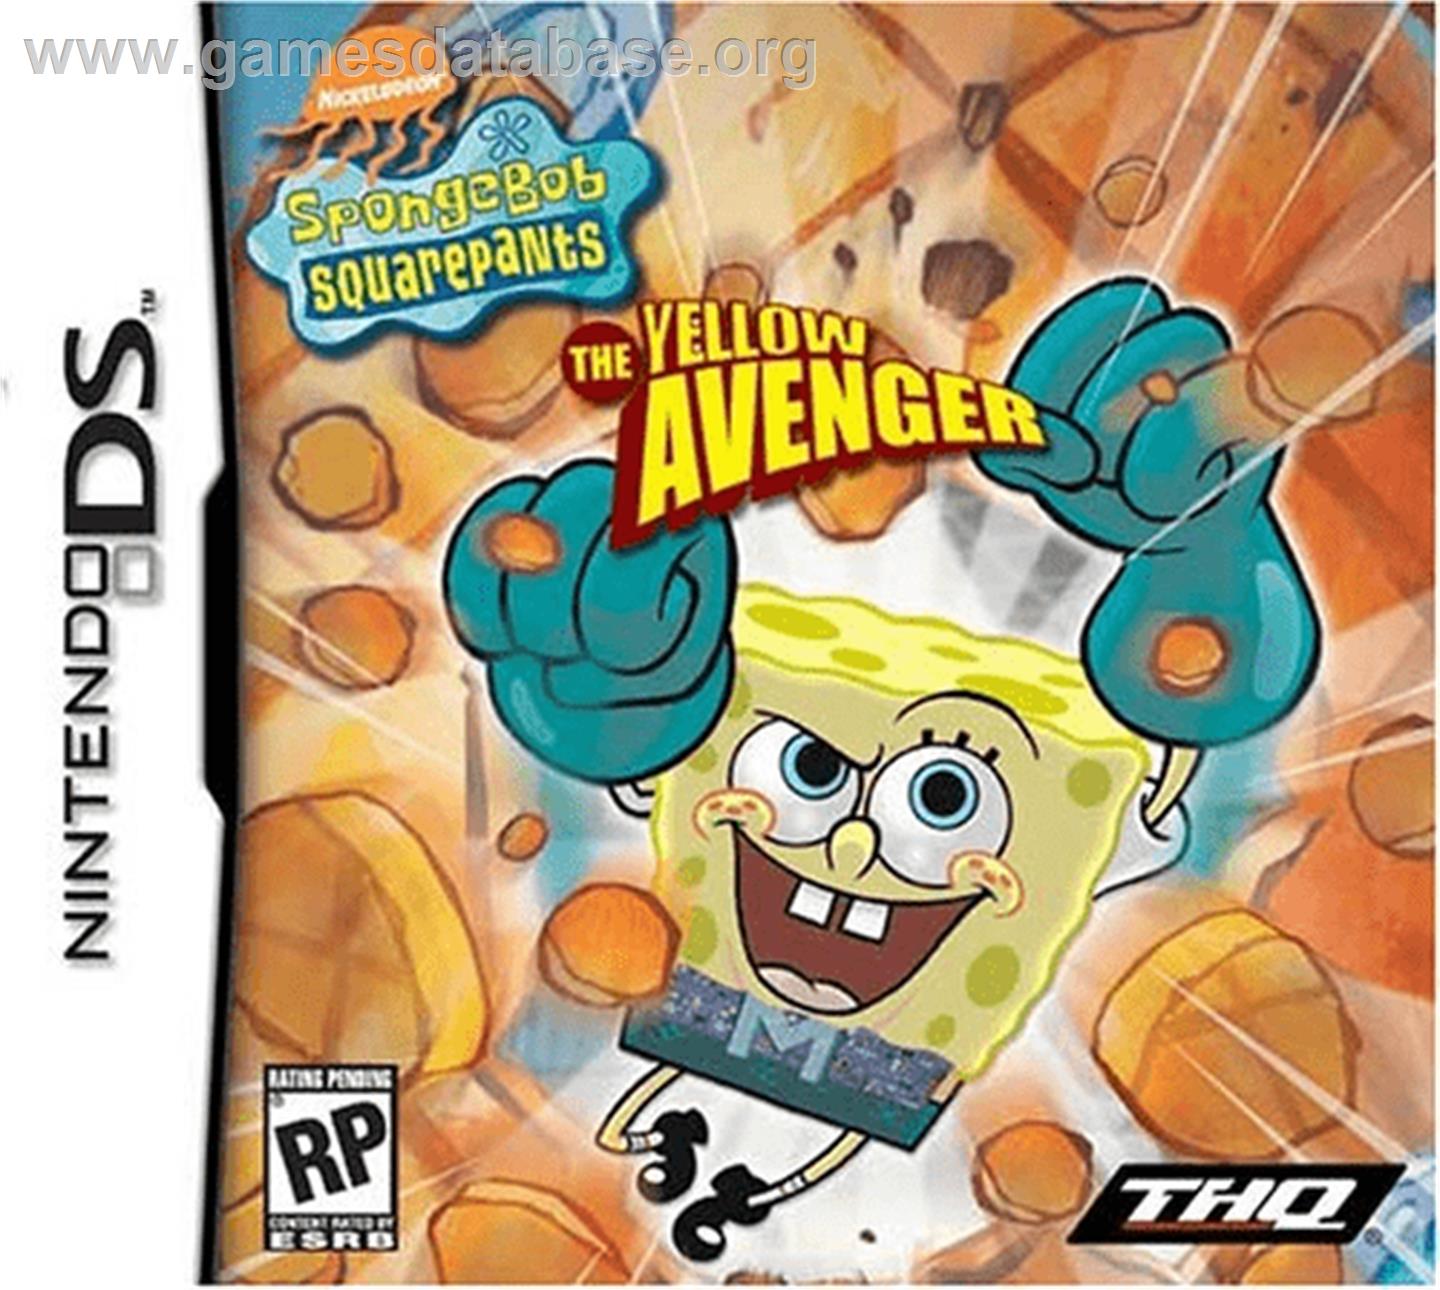 SpongeBob SquarePants: The Yellow Avenger - Nintendo DS - Artwork - Box